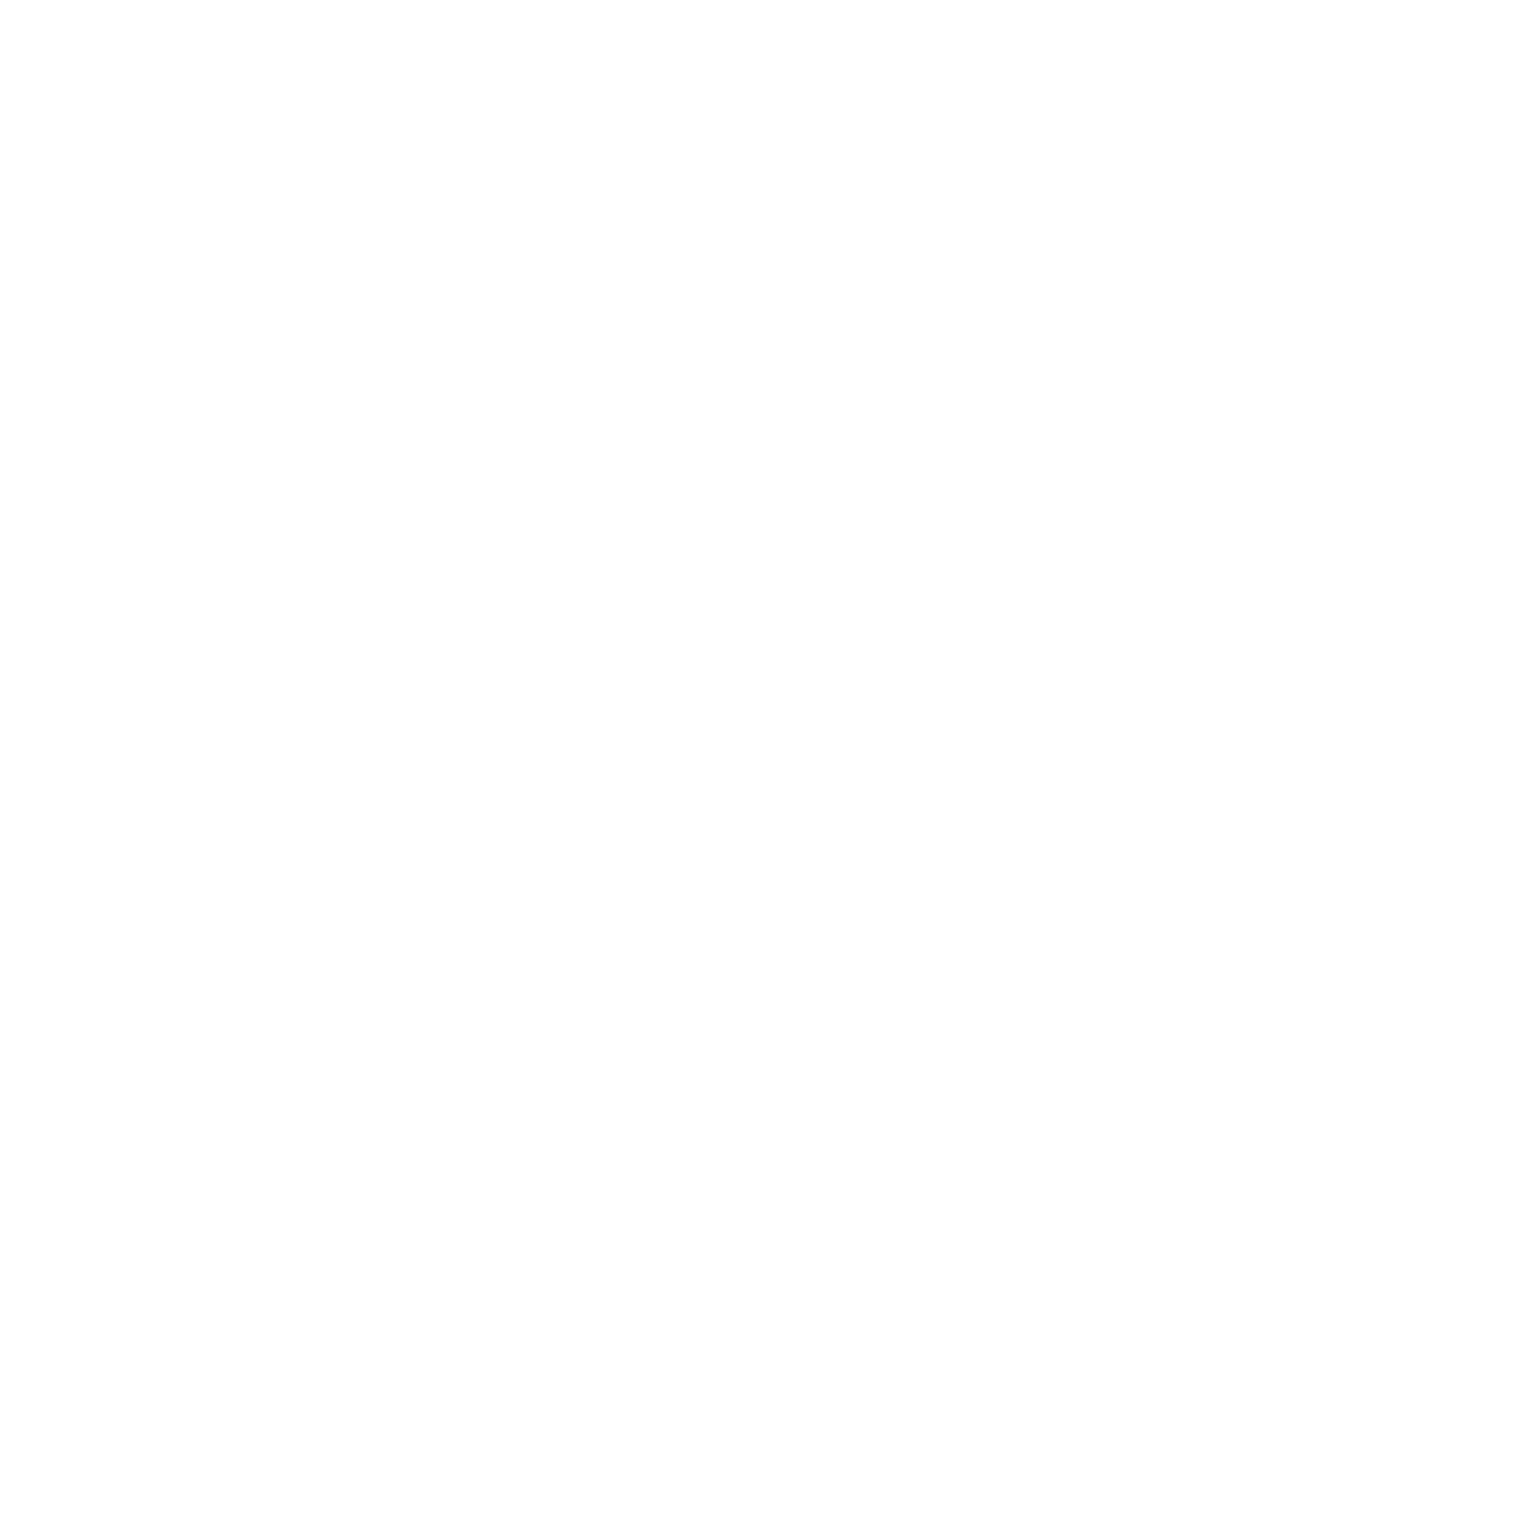 International Bancshares Corp logo for dark backgrounds (transparent PNG)